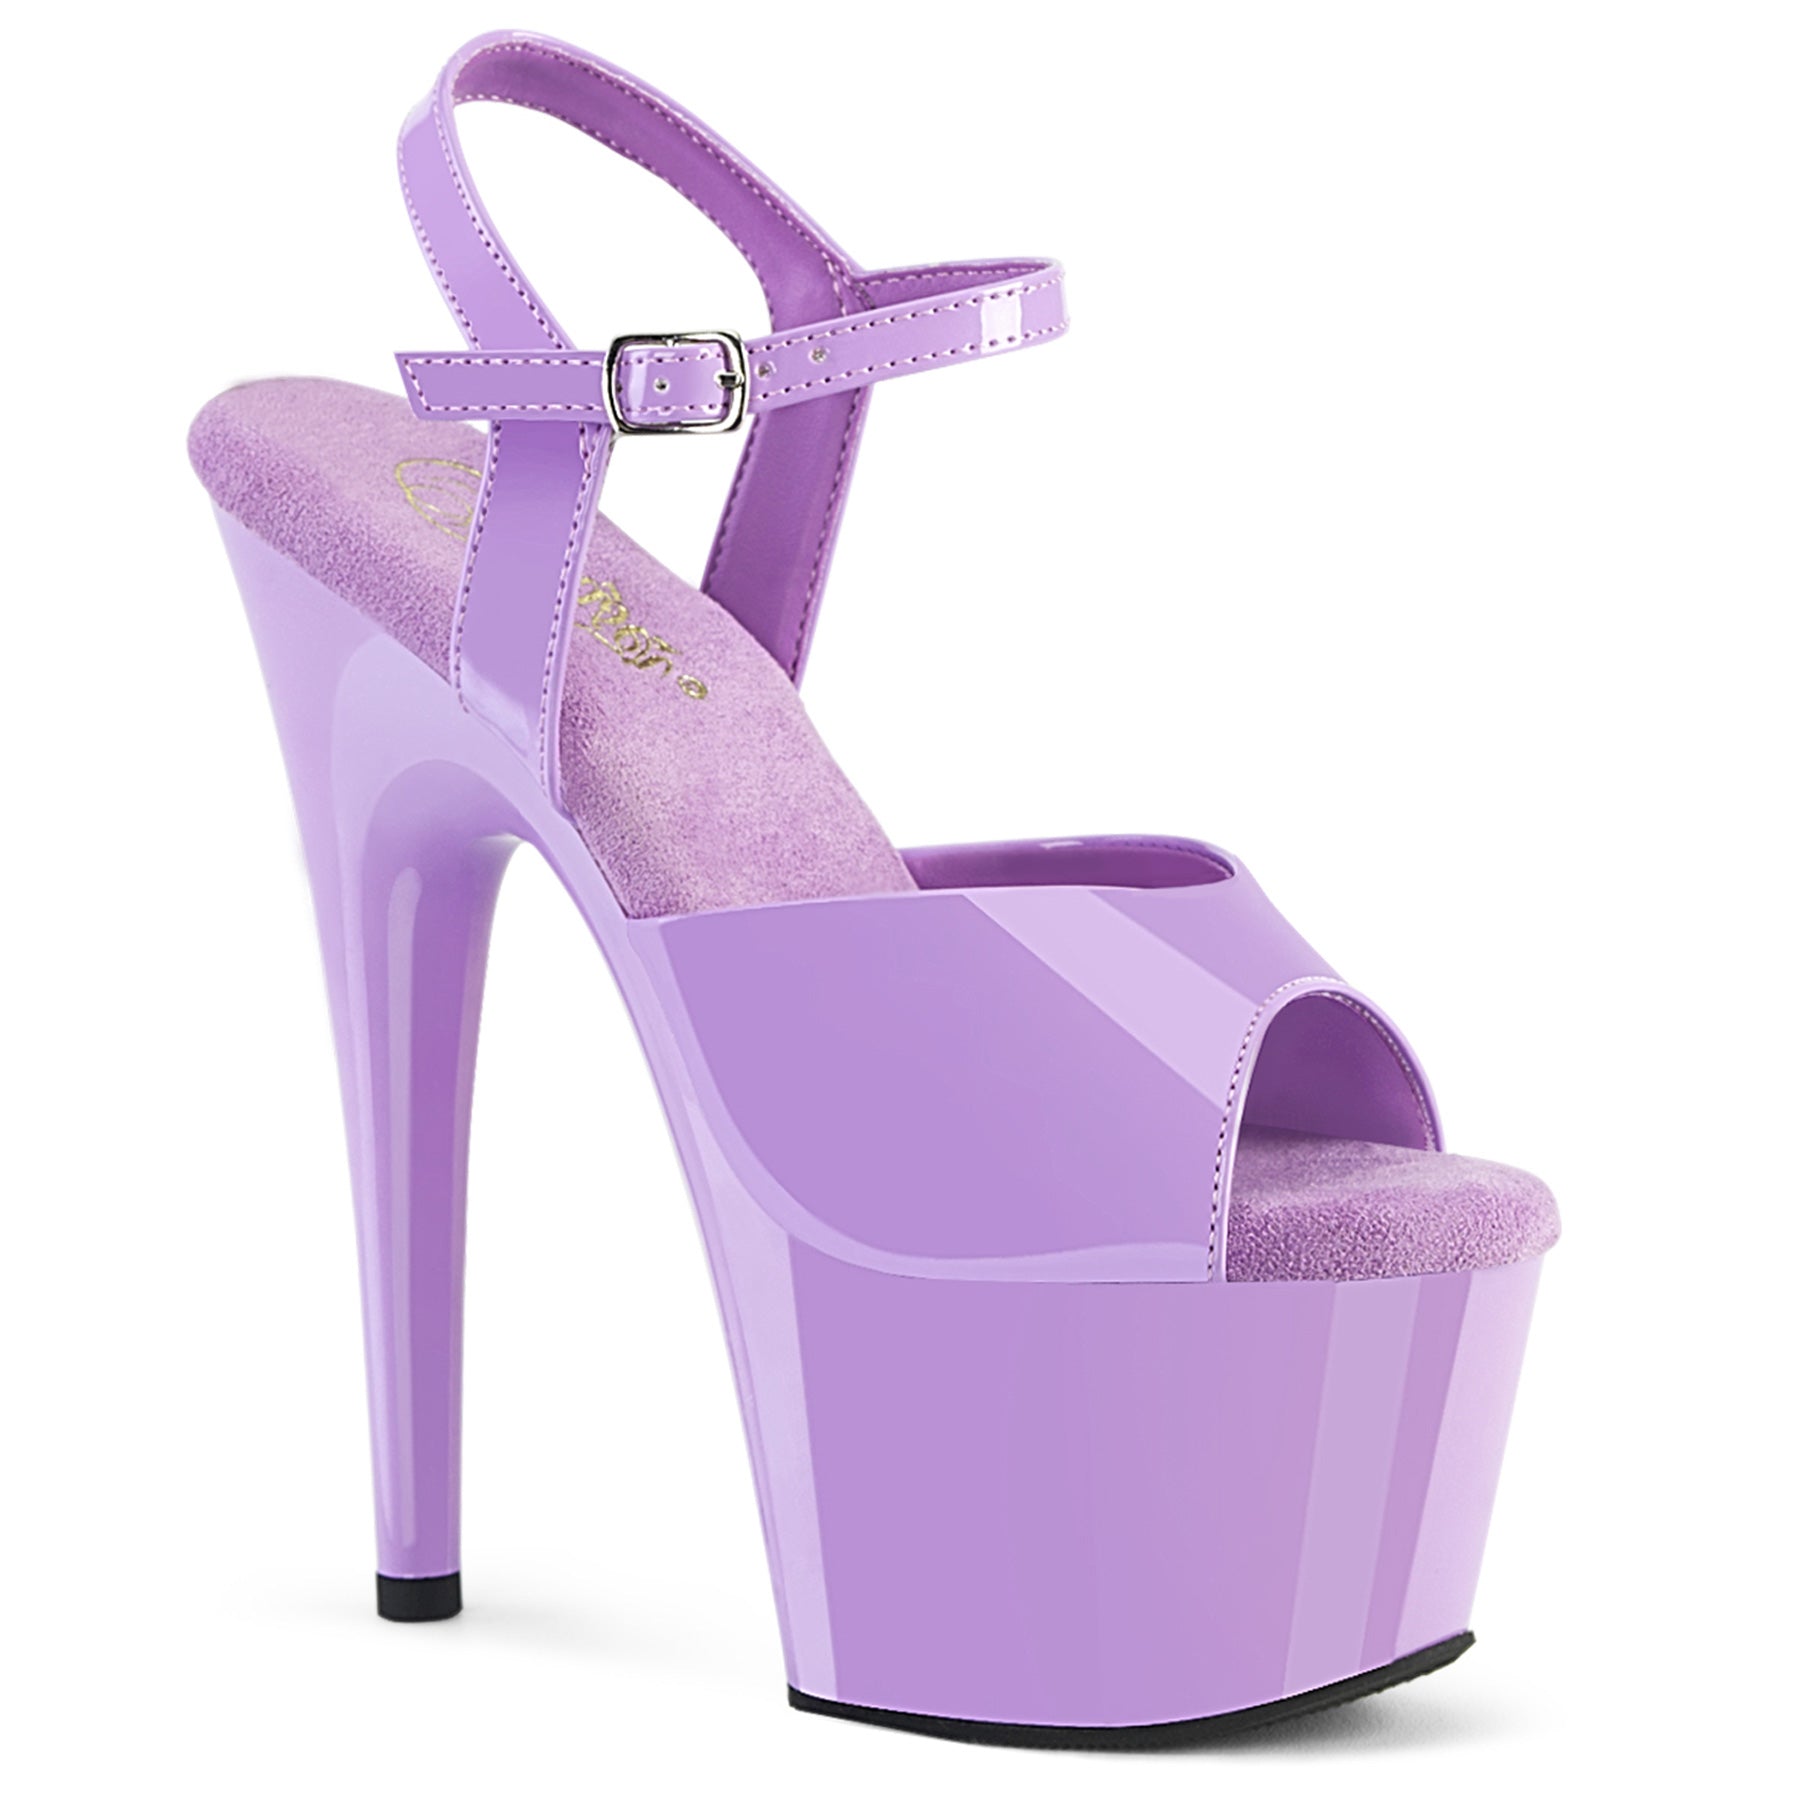 7 Inch Heel ADORE-709 Lavender Patent